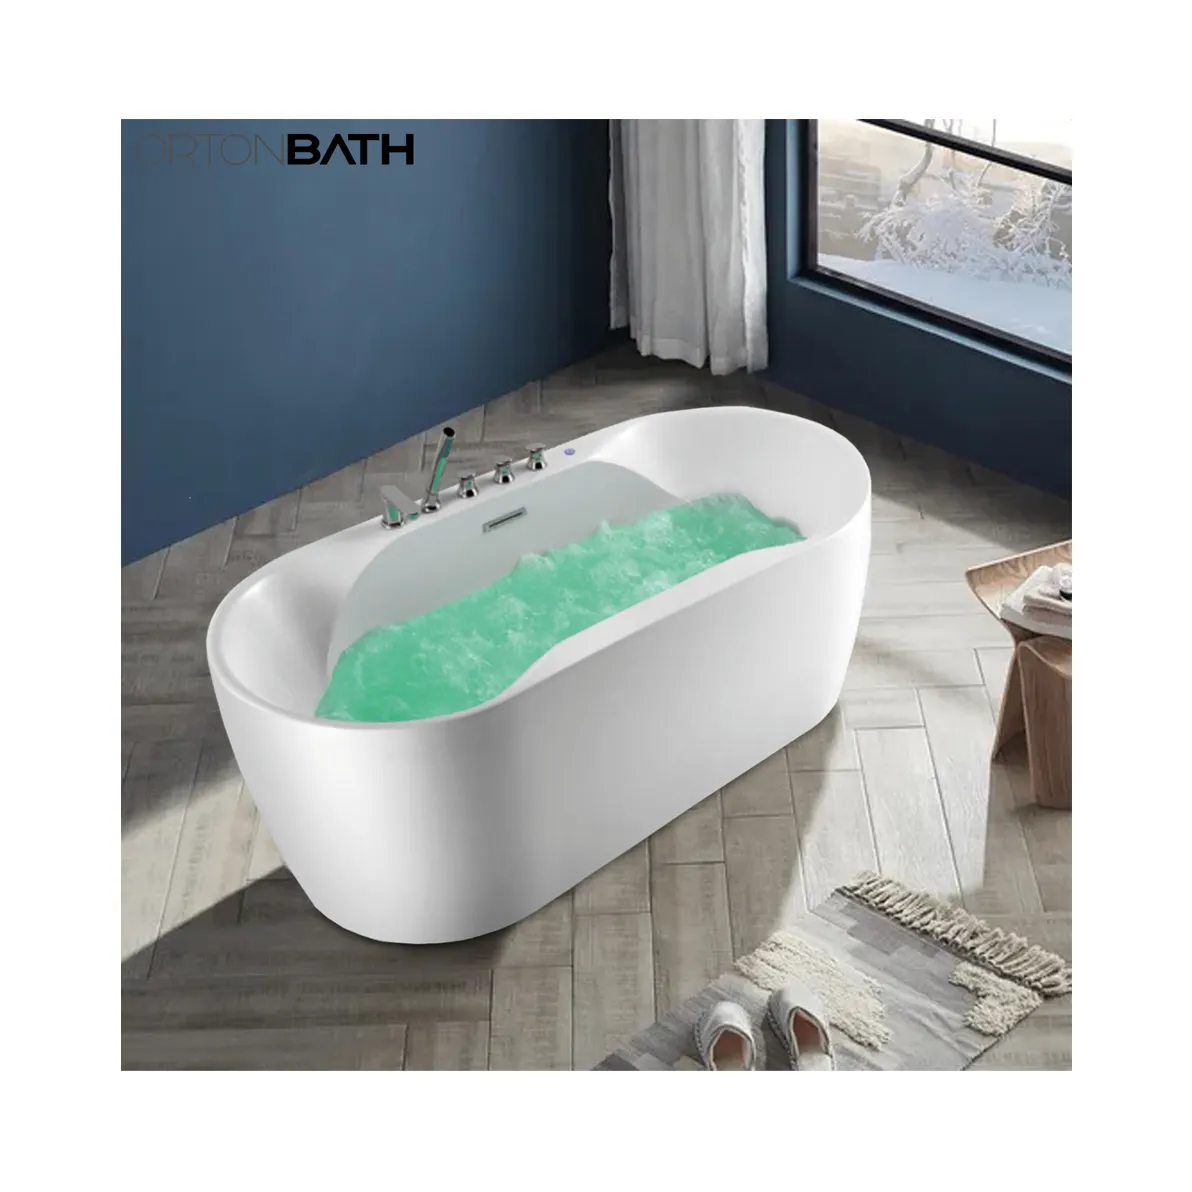 ORTONBATH Water Saving Adult Acrylic Freestanding Hot Swim SPA Bathtub Bath Tub Freestanding Plastic Sanitary Ware Soaking Bath